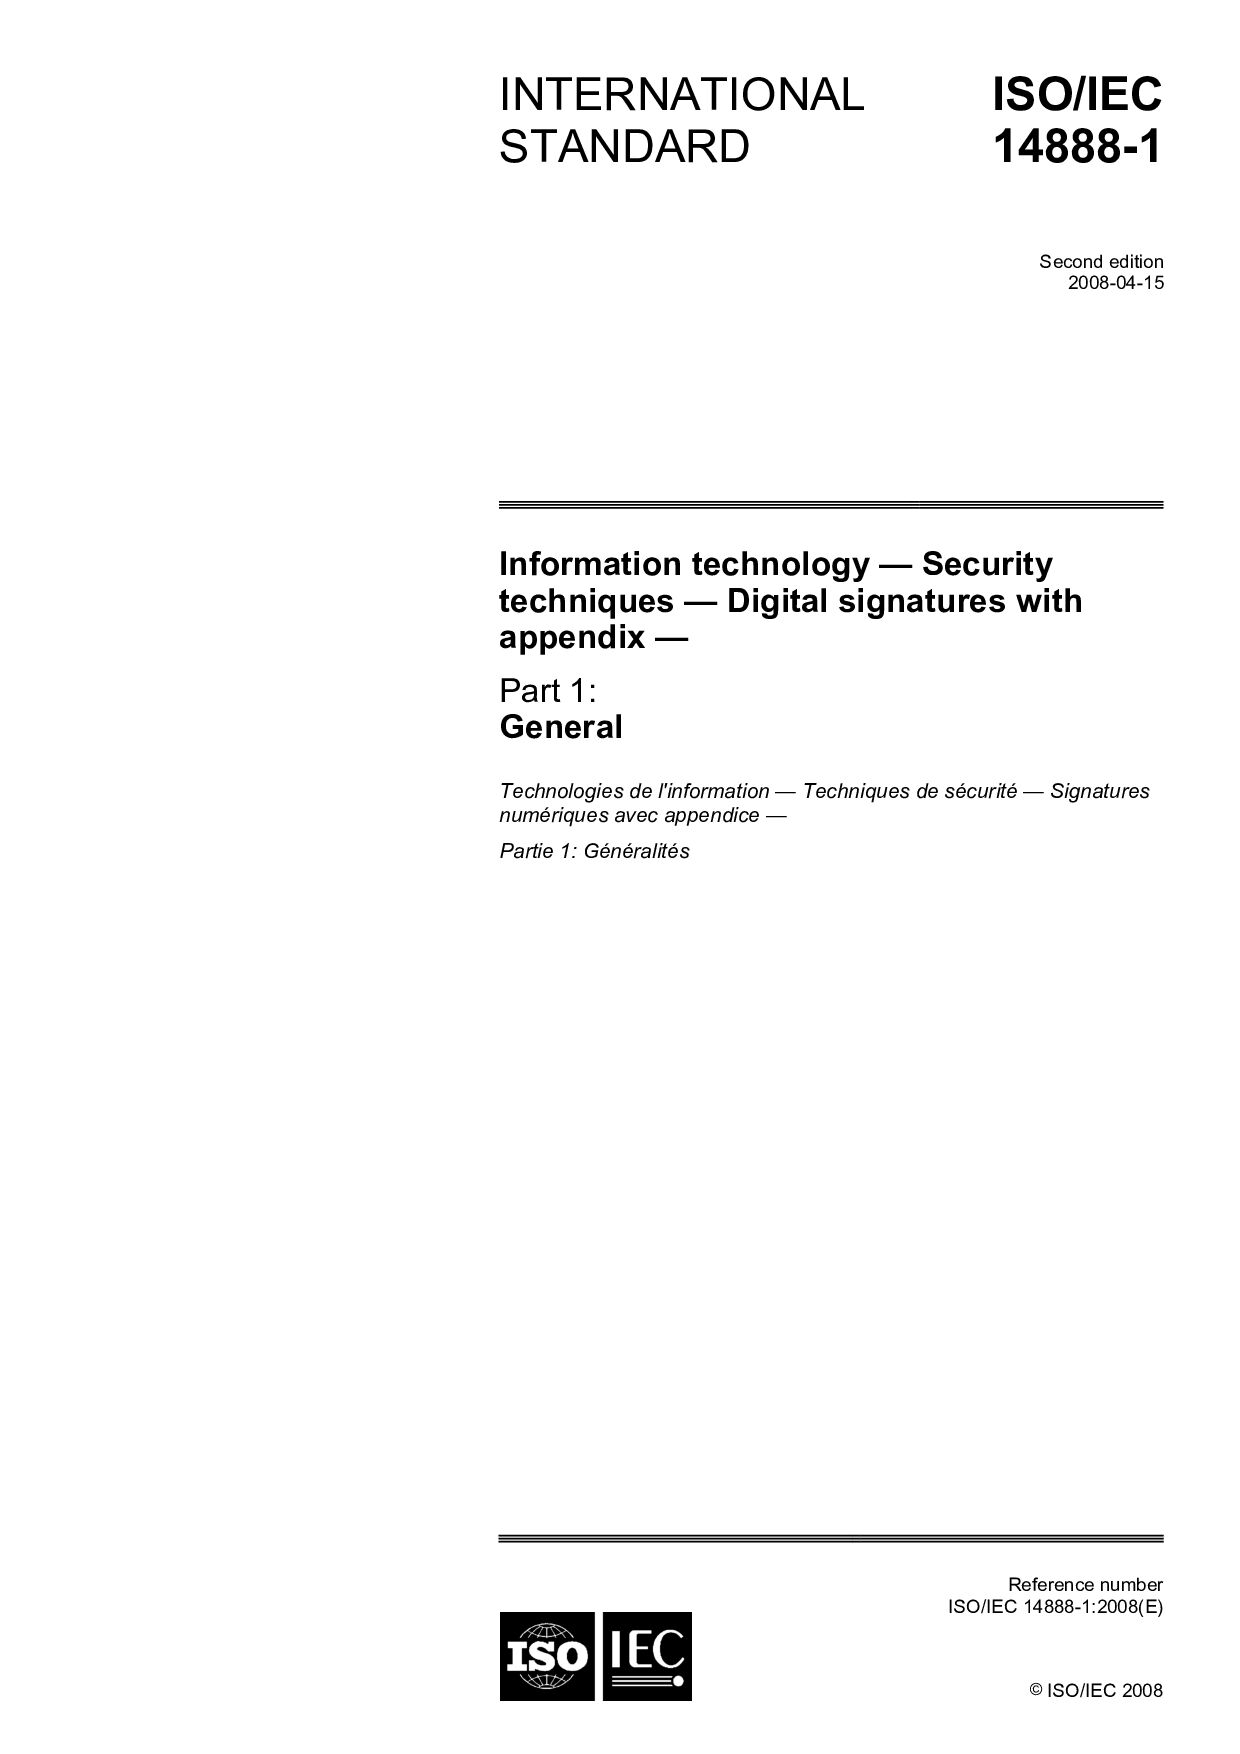 ISO/IEC 14888-1:2008